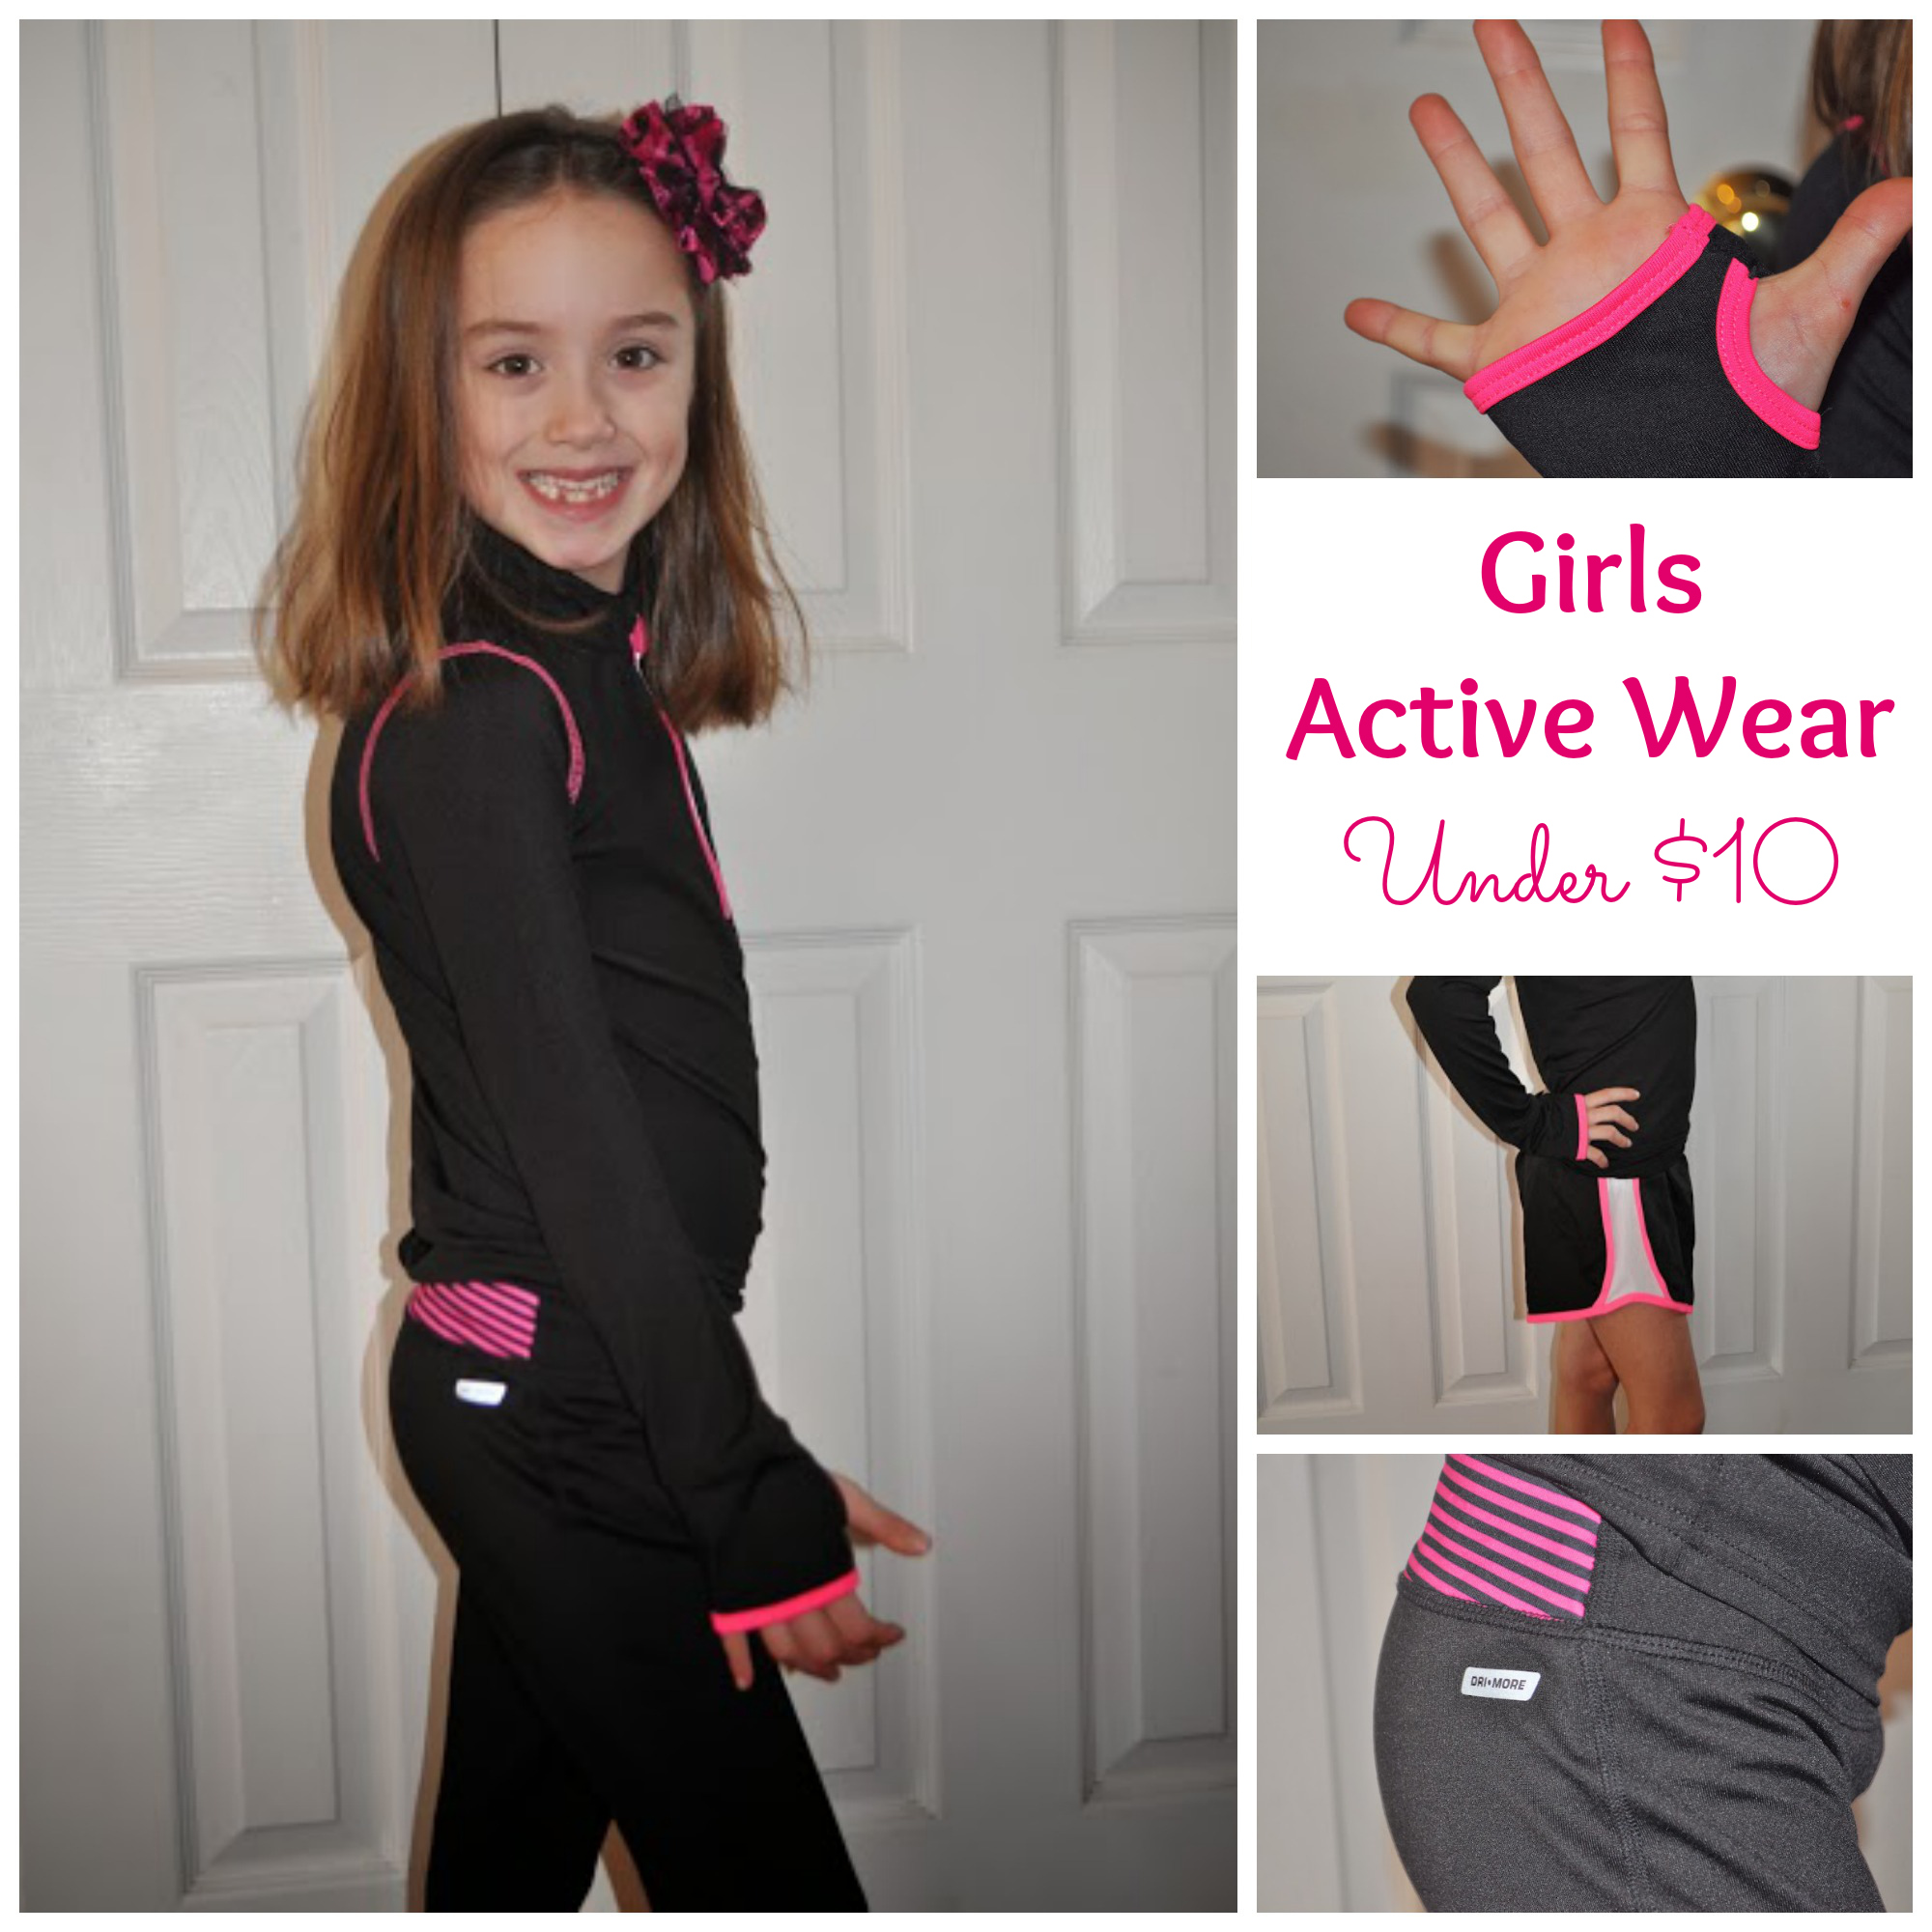 Danskin Now Active Wear for Little Girls from Walmart under $10